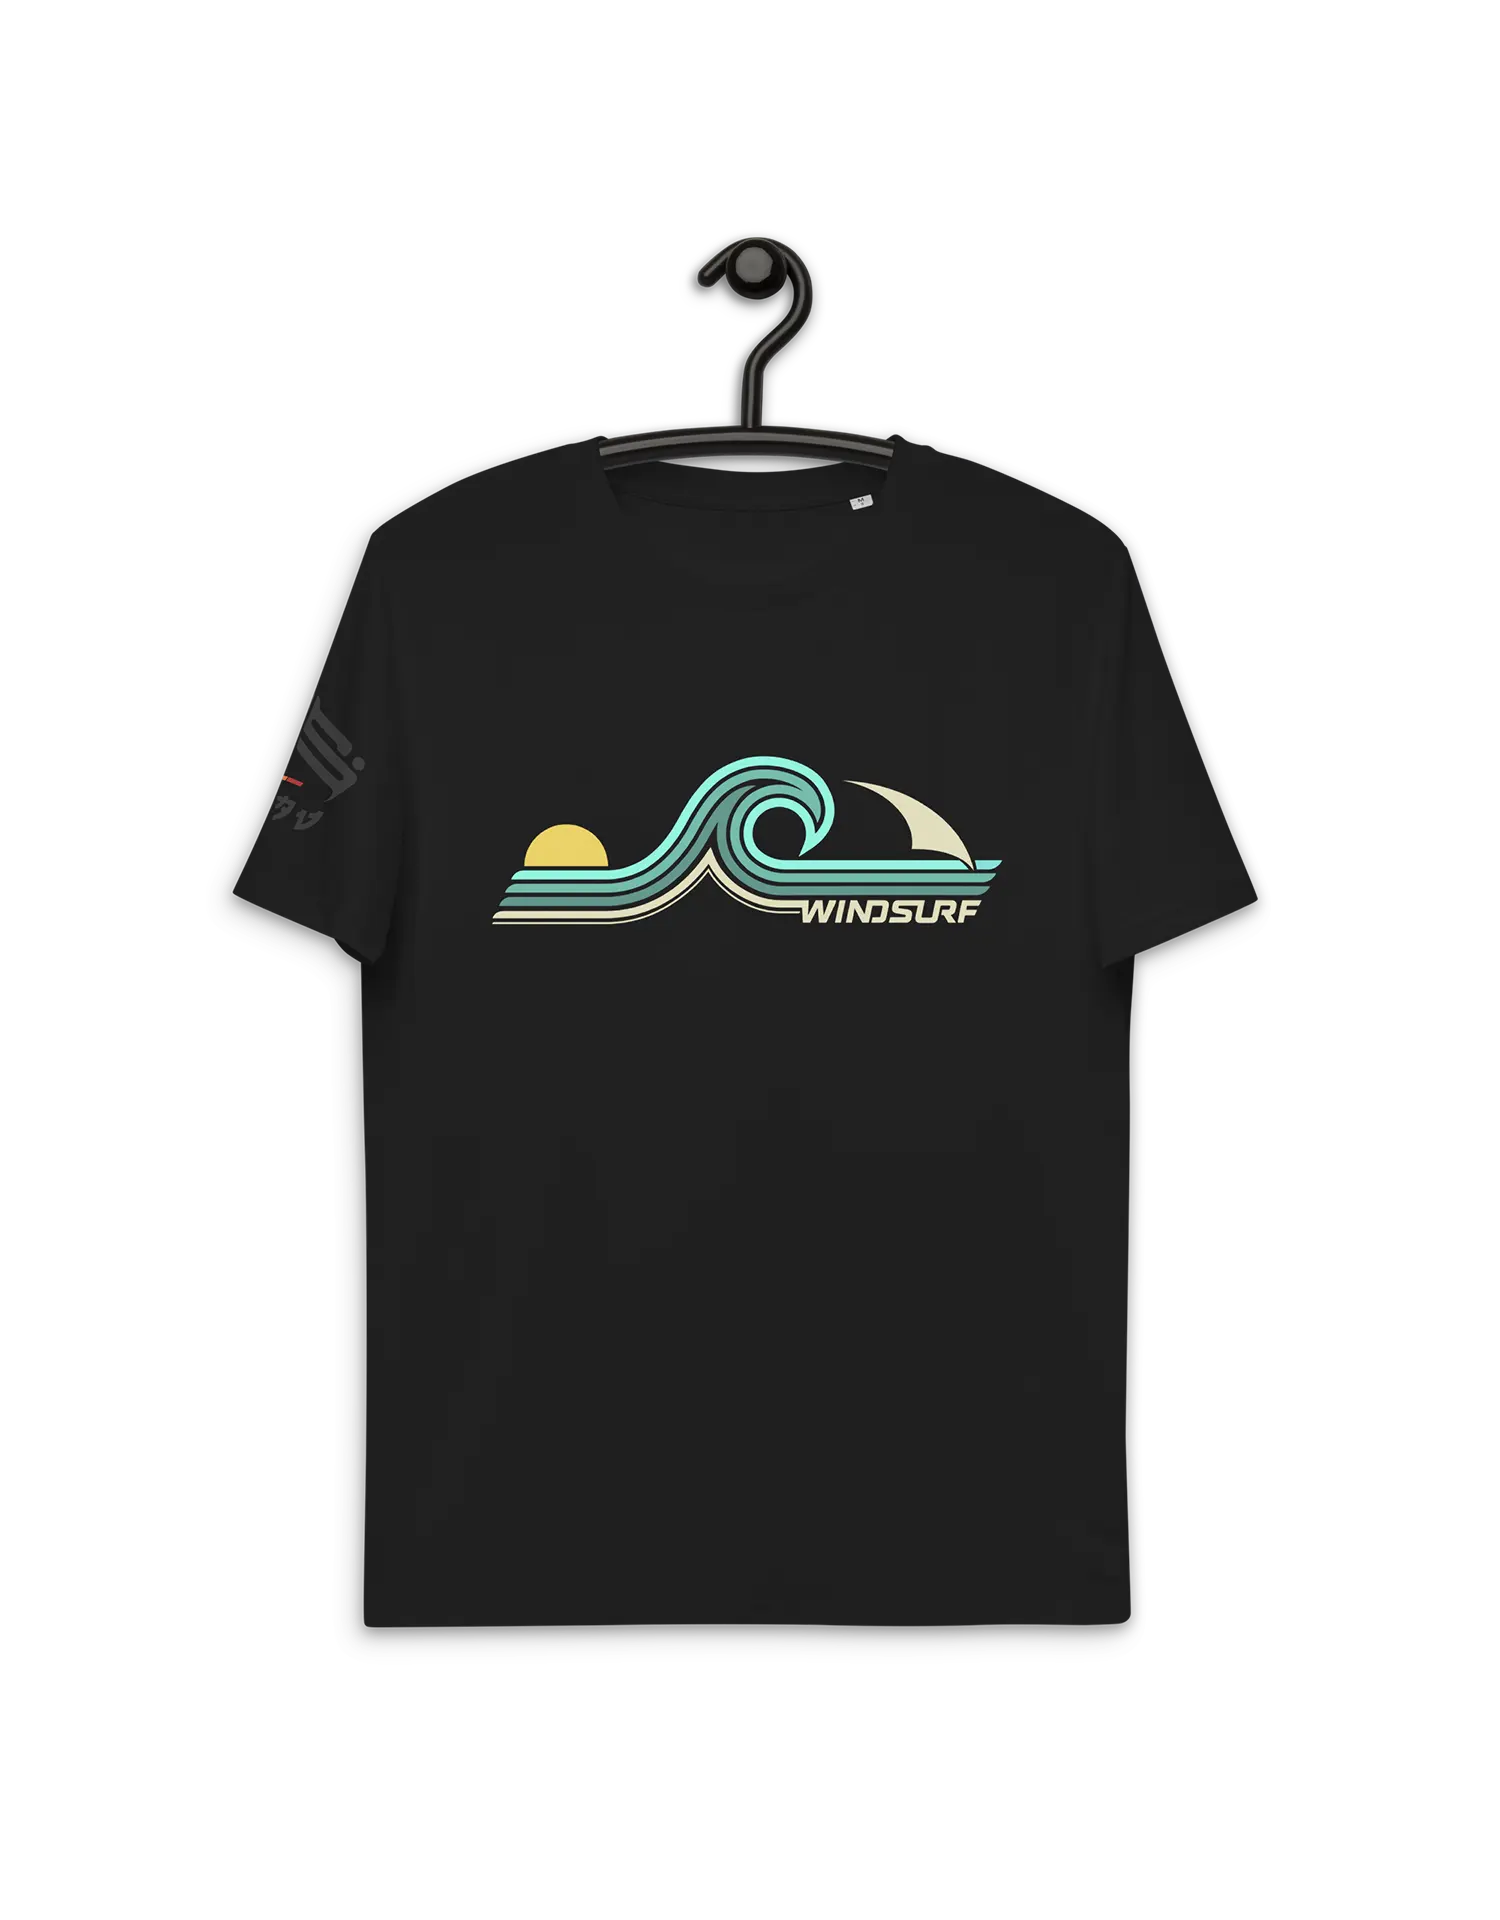 Windsurf Wave Black Premium Organic Cotton Eco-friendly T-Shirt by KOAV